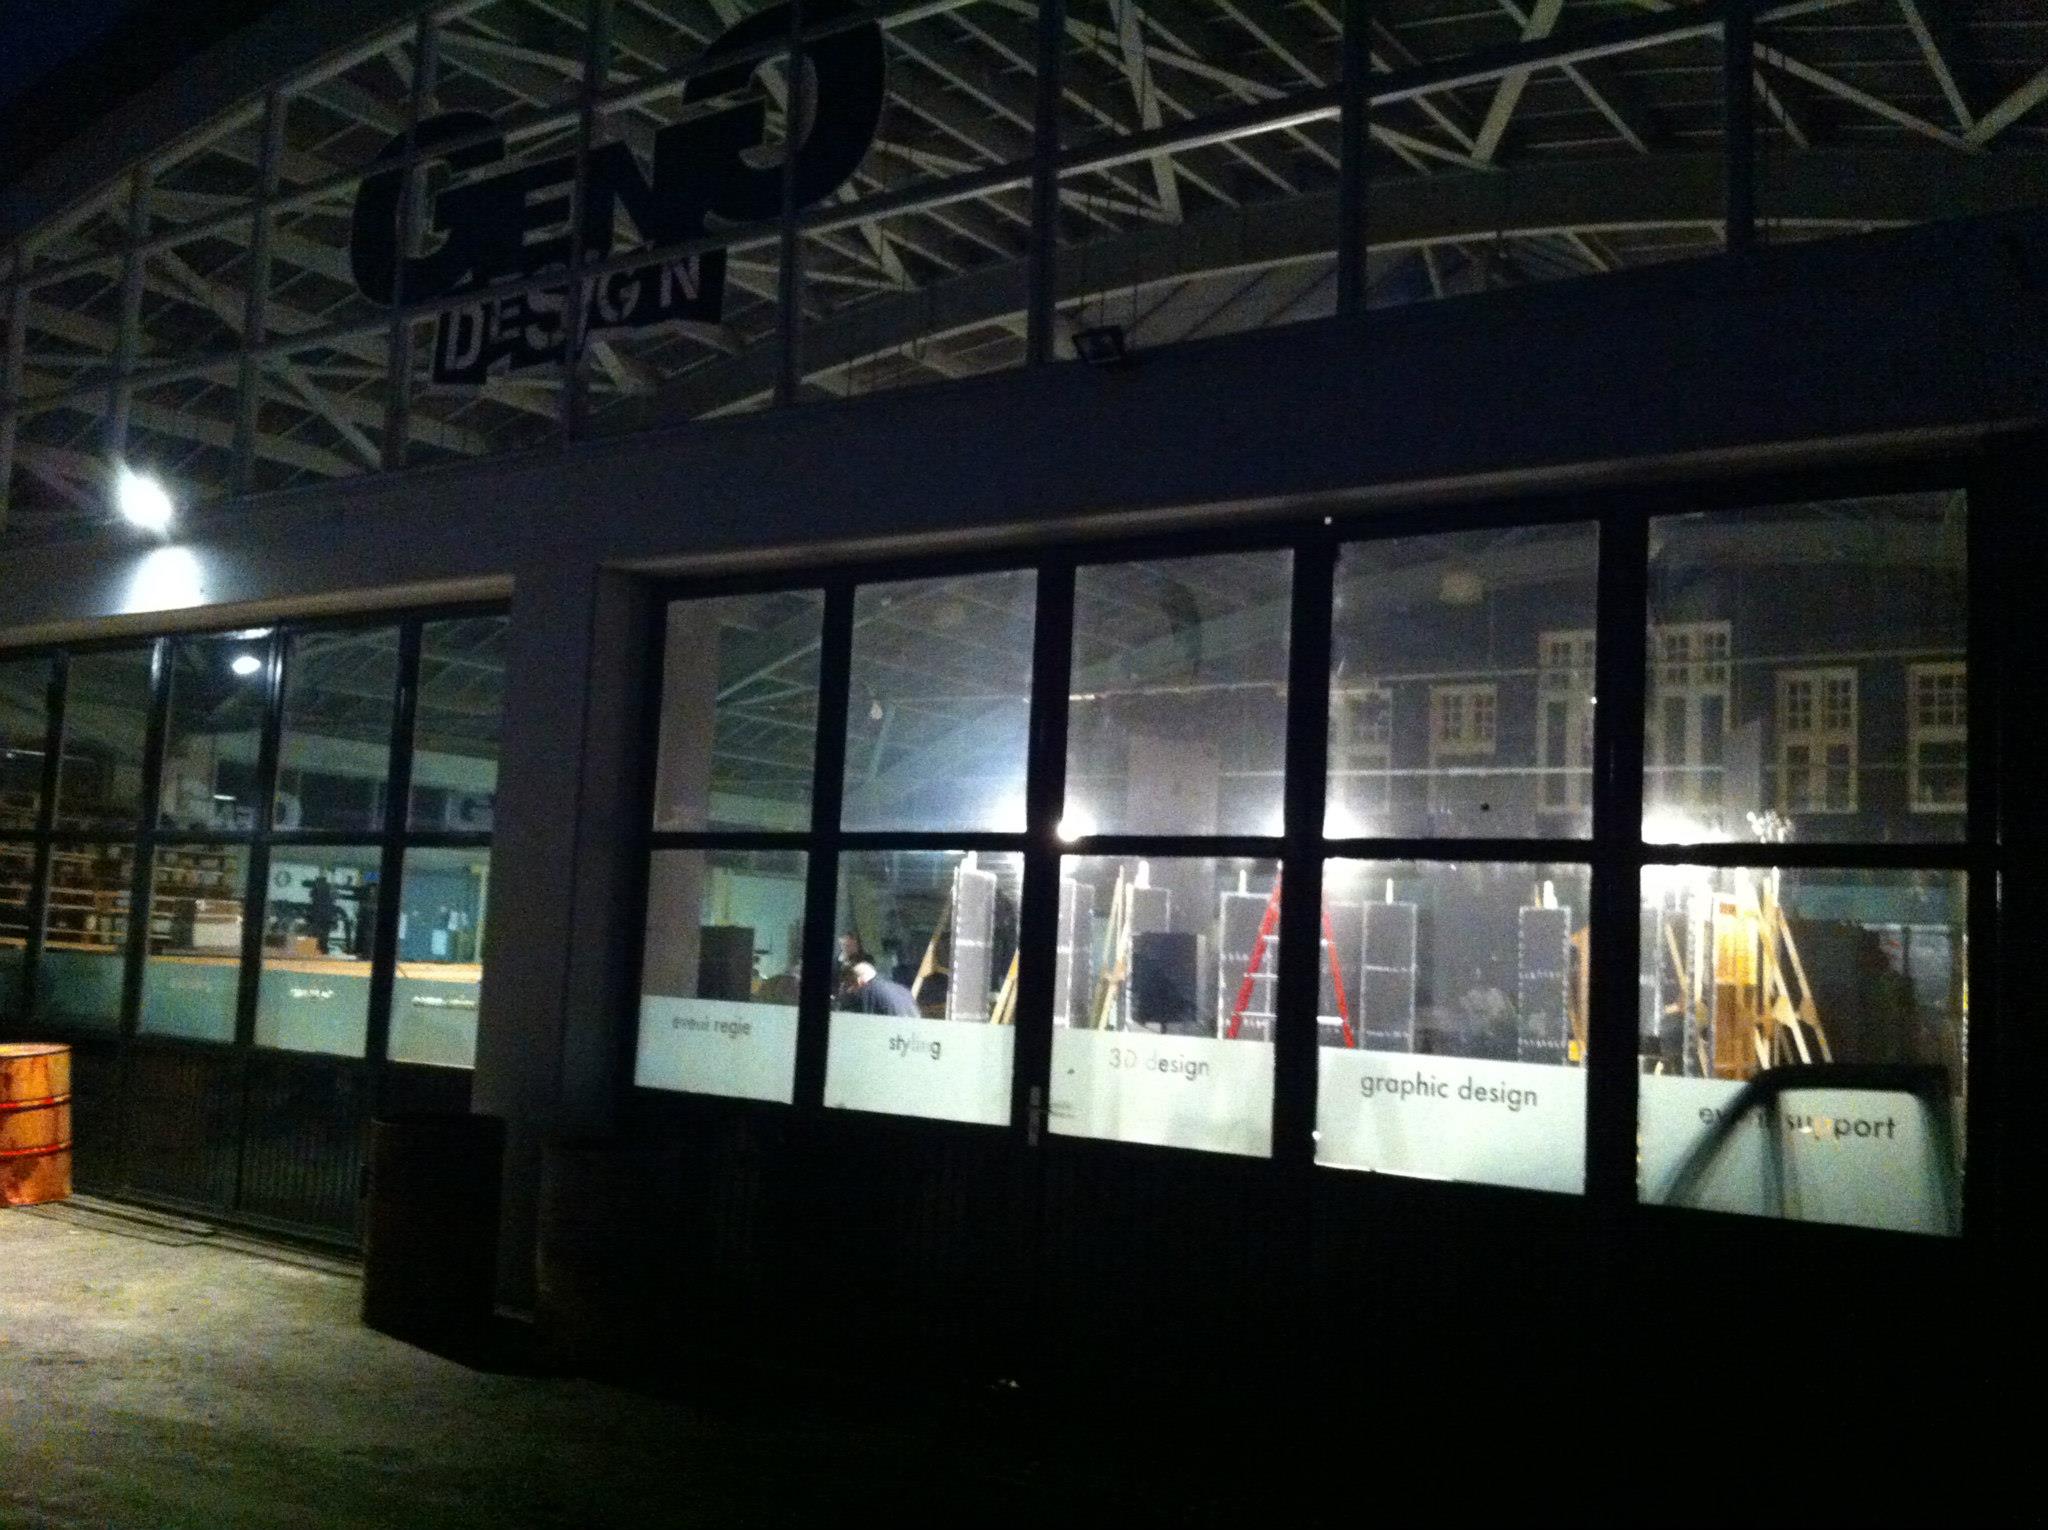 Exterior view of the location GenG Design in Dordrecht, Netherlands